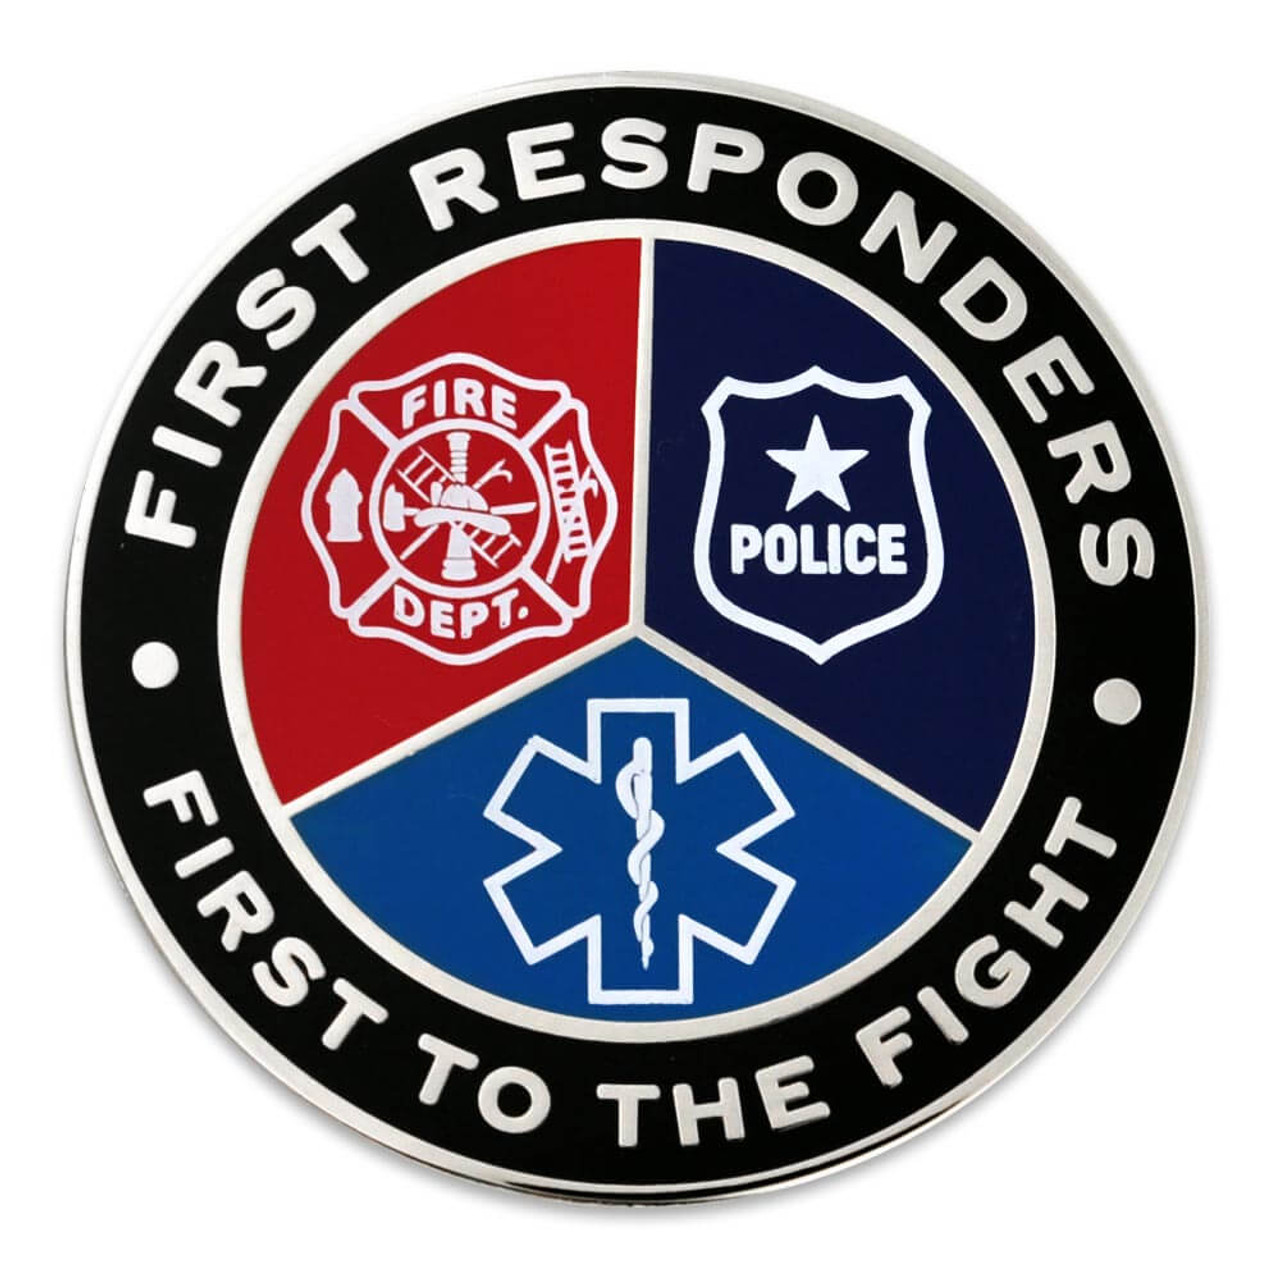 1st responders